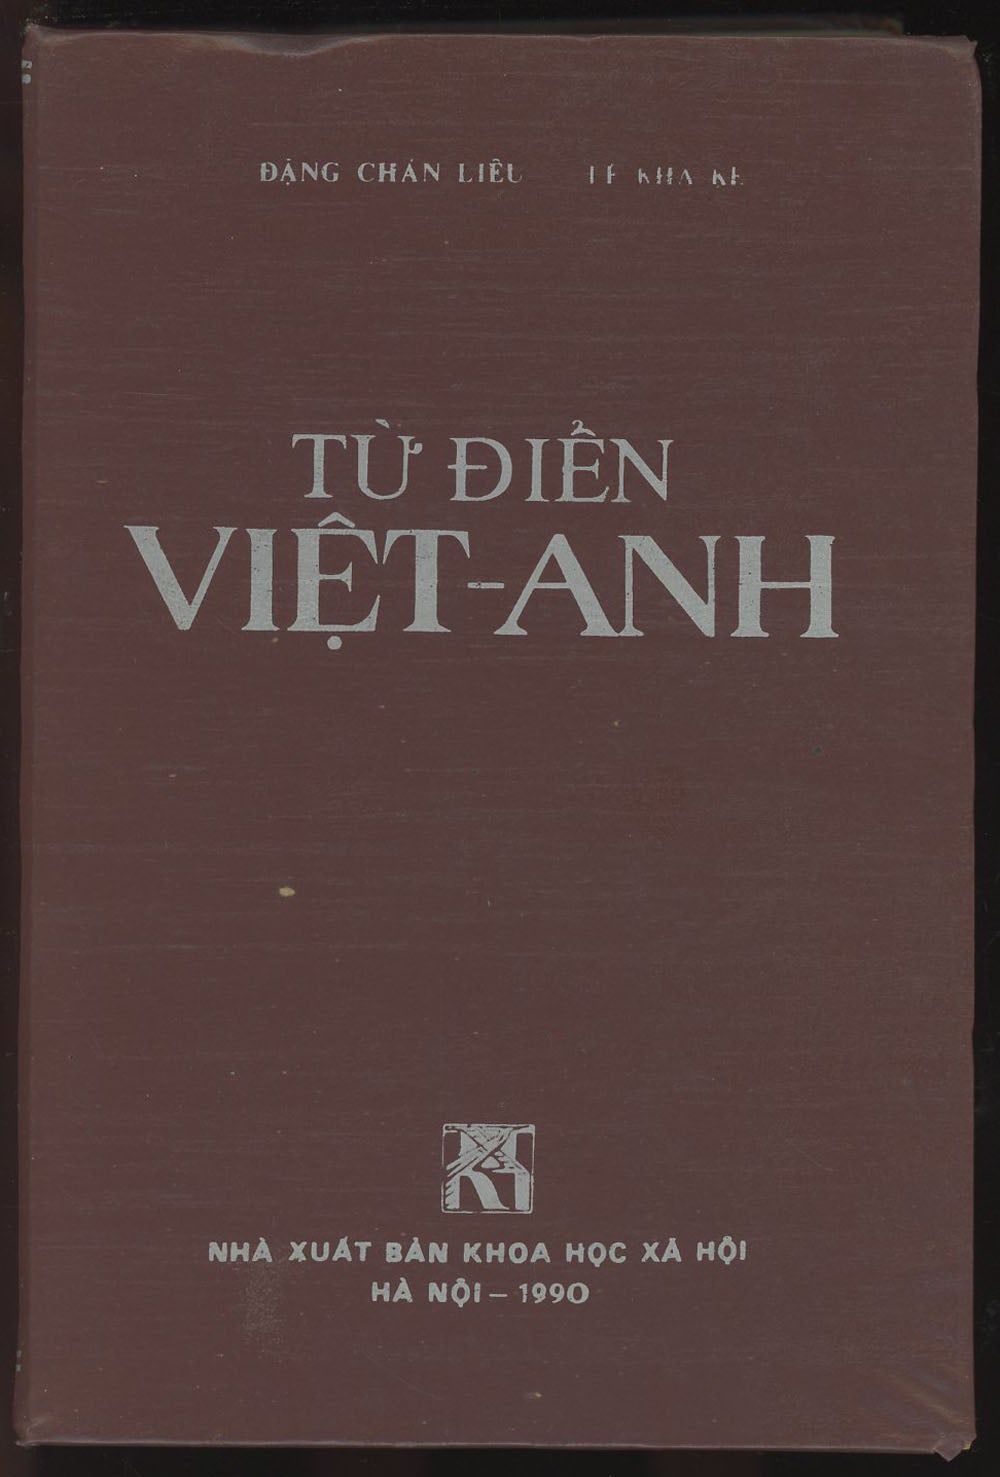 Dang Chan Lieu, Le Kha Ke / Tu Dien Viet-Anh Vietnamese-English ...
